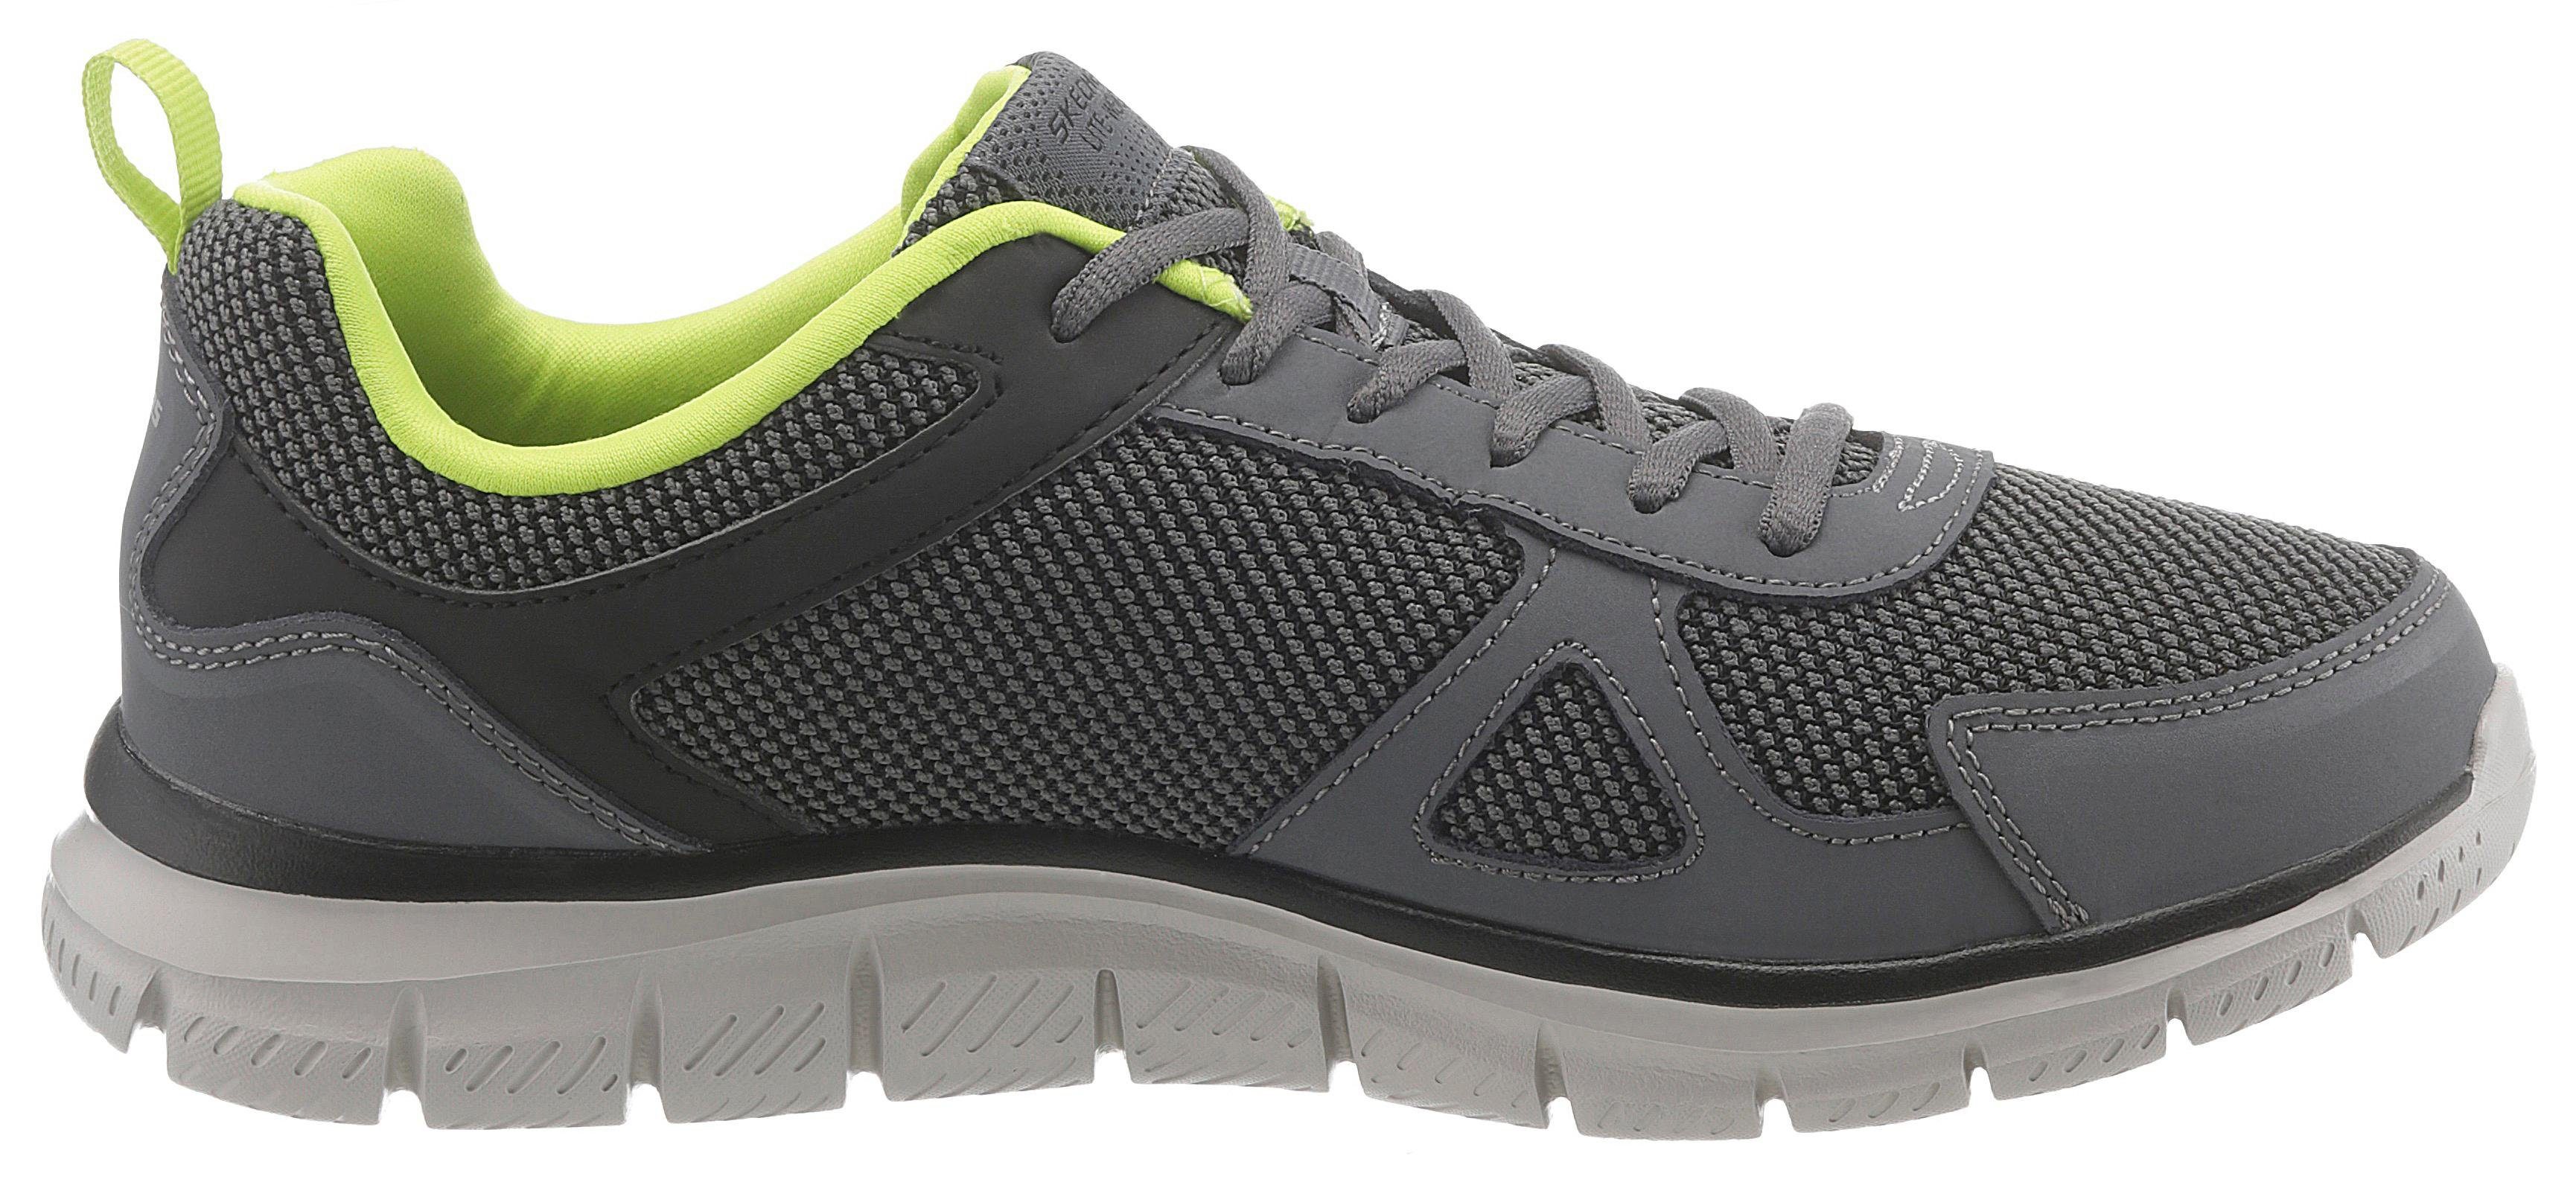 Track Sneaker Skechers mit seitlichem Grau-Schwarz-Grün / Charcoal-Black-Lime Logo CCLM -